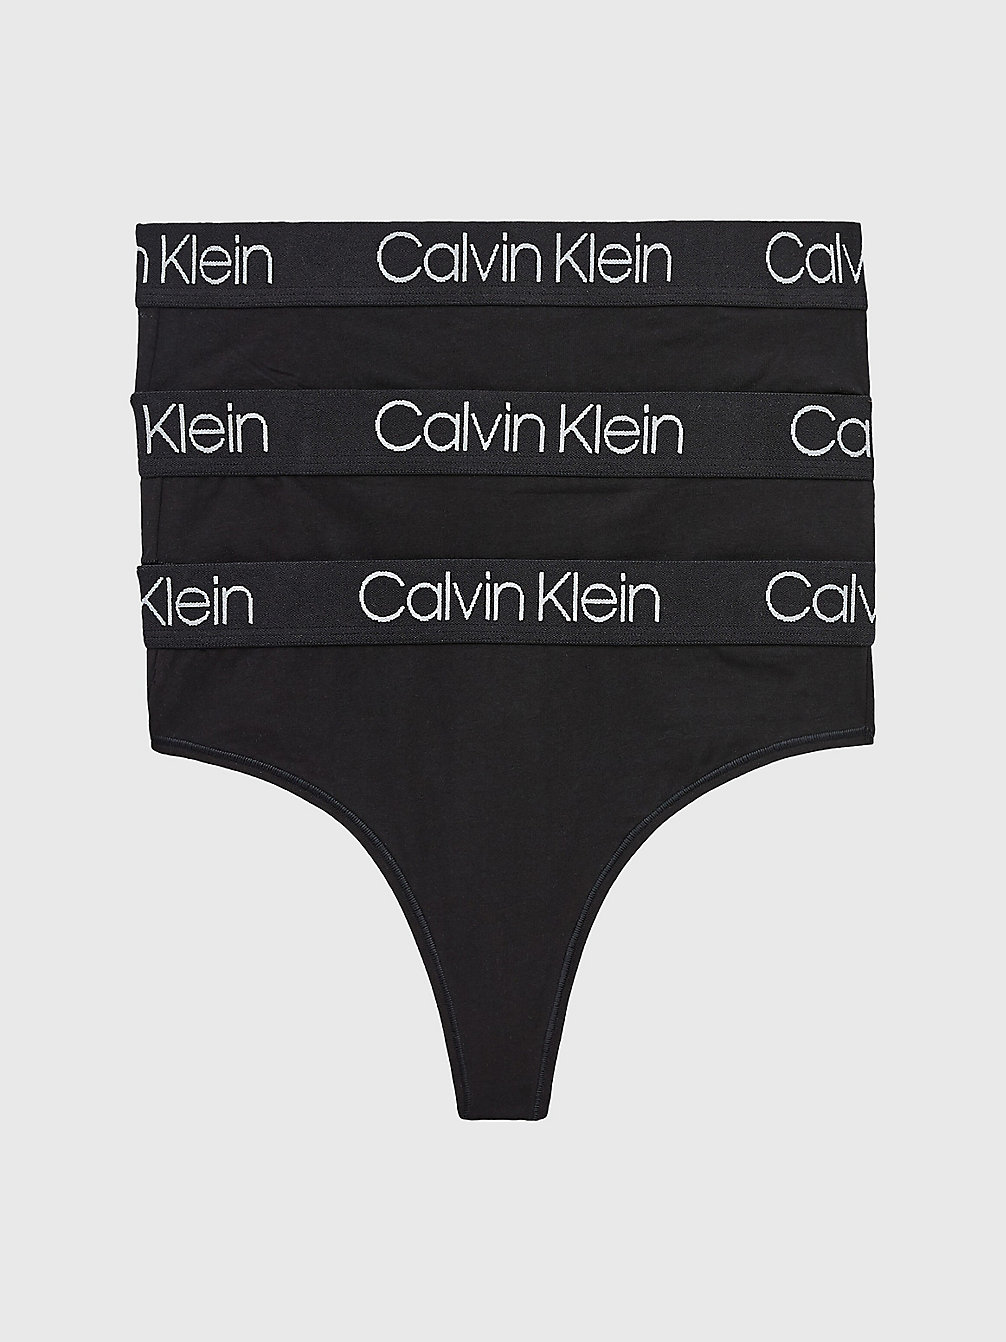 BLACK/BLACK/BLACK 3 Pack High Waisted Thongs - Body undefined women Calvin Klein